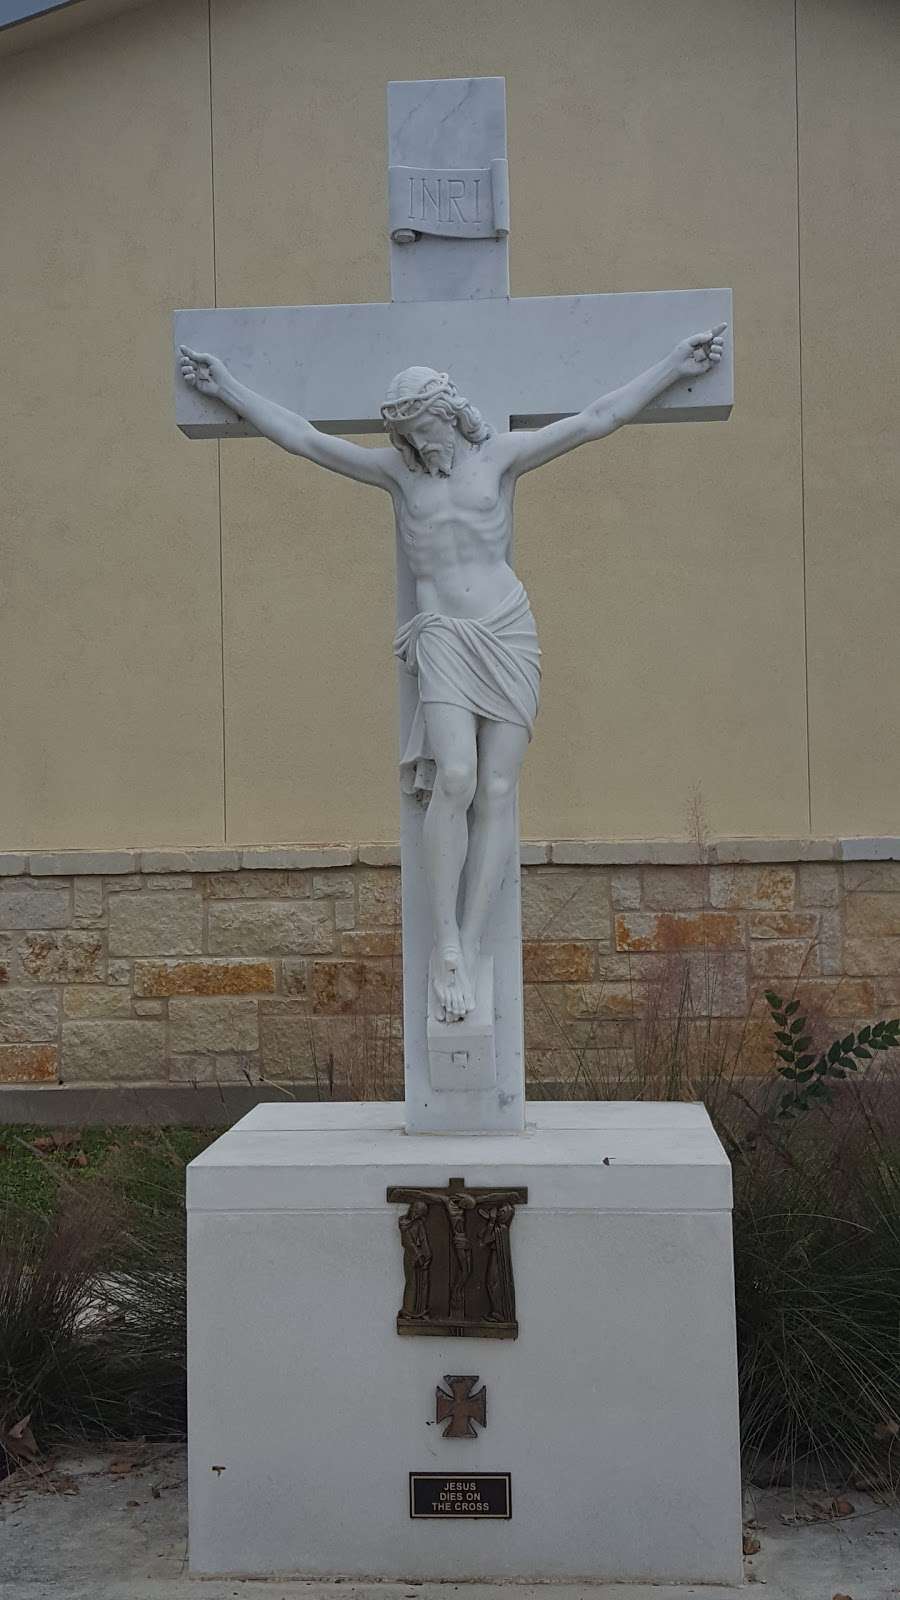 St. Jerome Catholic Church | 7955 Real Rd, San Antonio, TX 78263, USA | Phone: (210) 648-2694